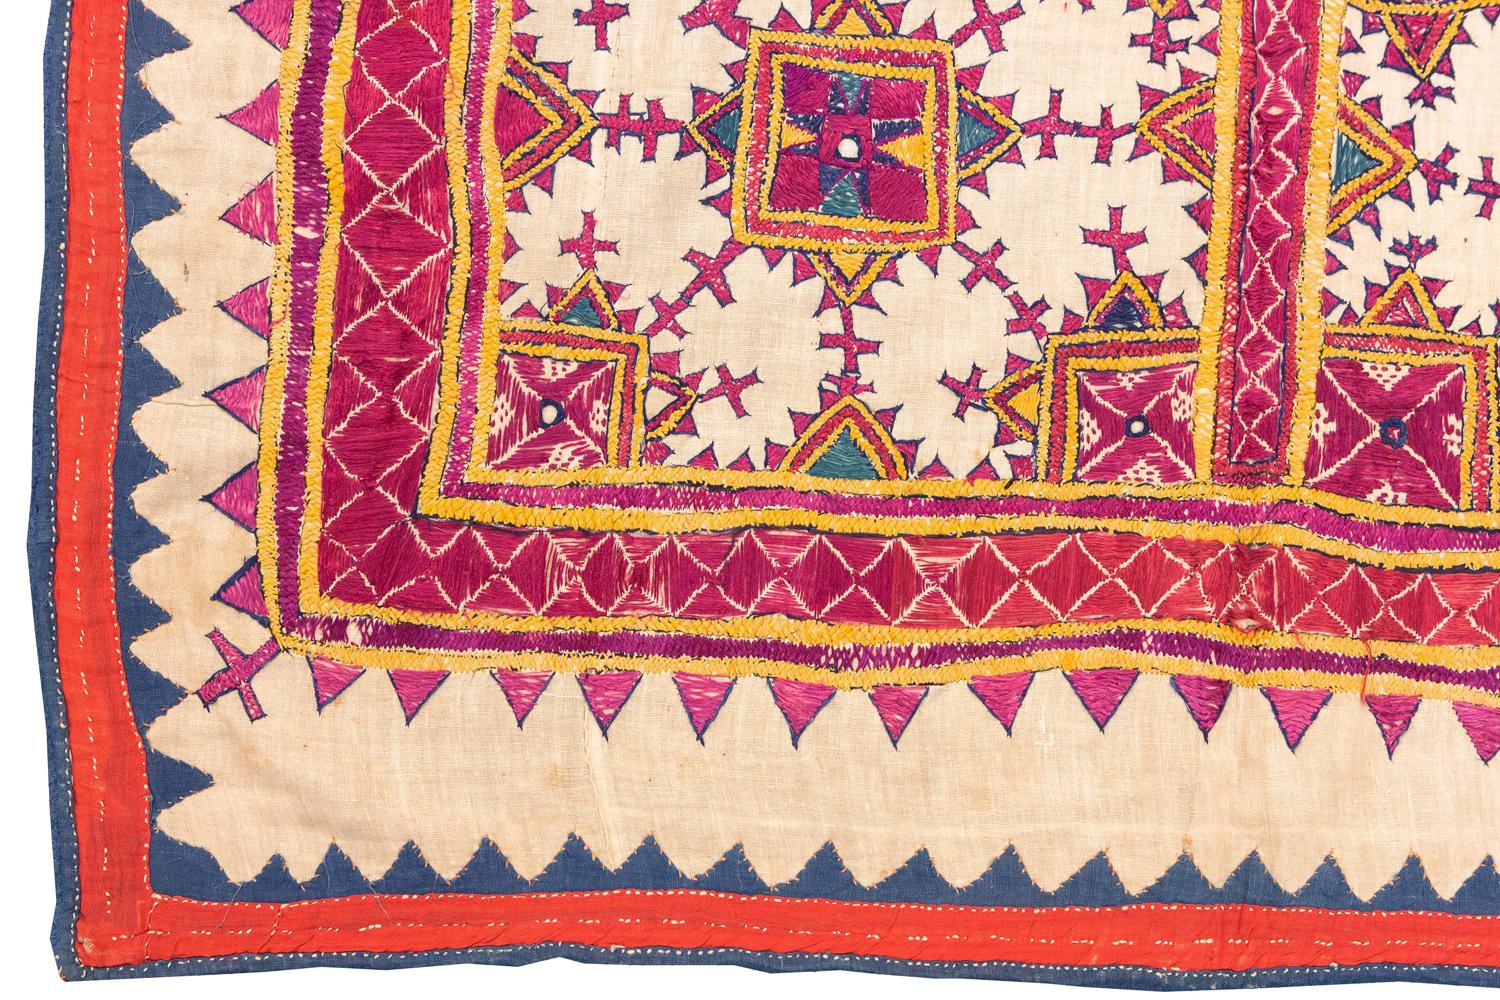 19th Century Antique Uzbekistan Embroidery Zig-Zag Border Textile, 1920-1950 For Sale